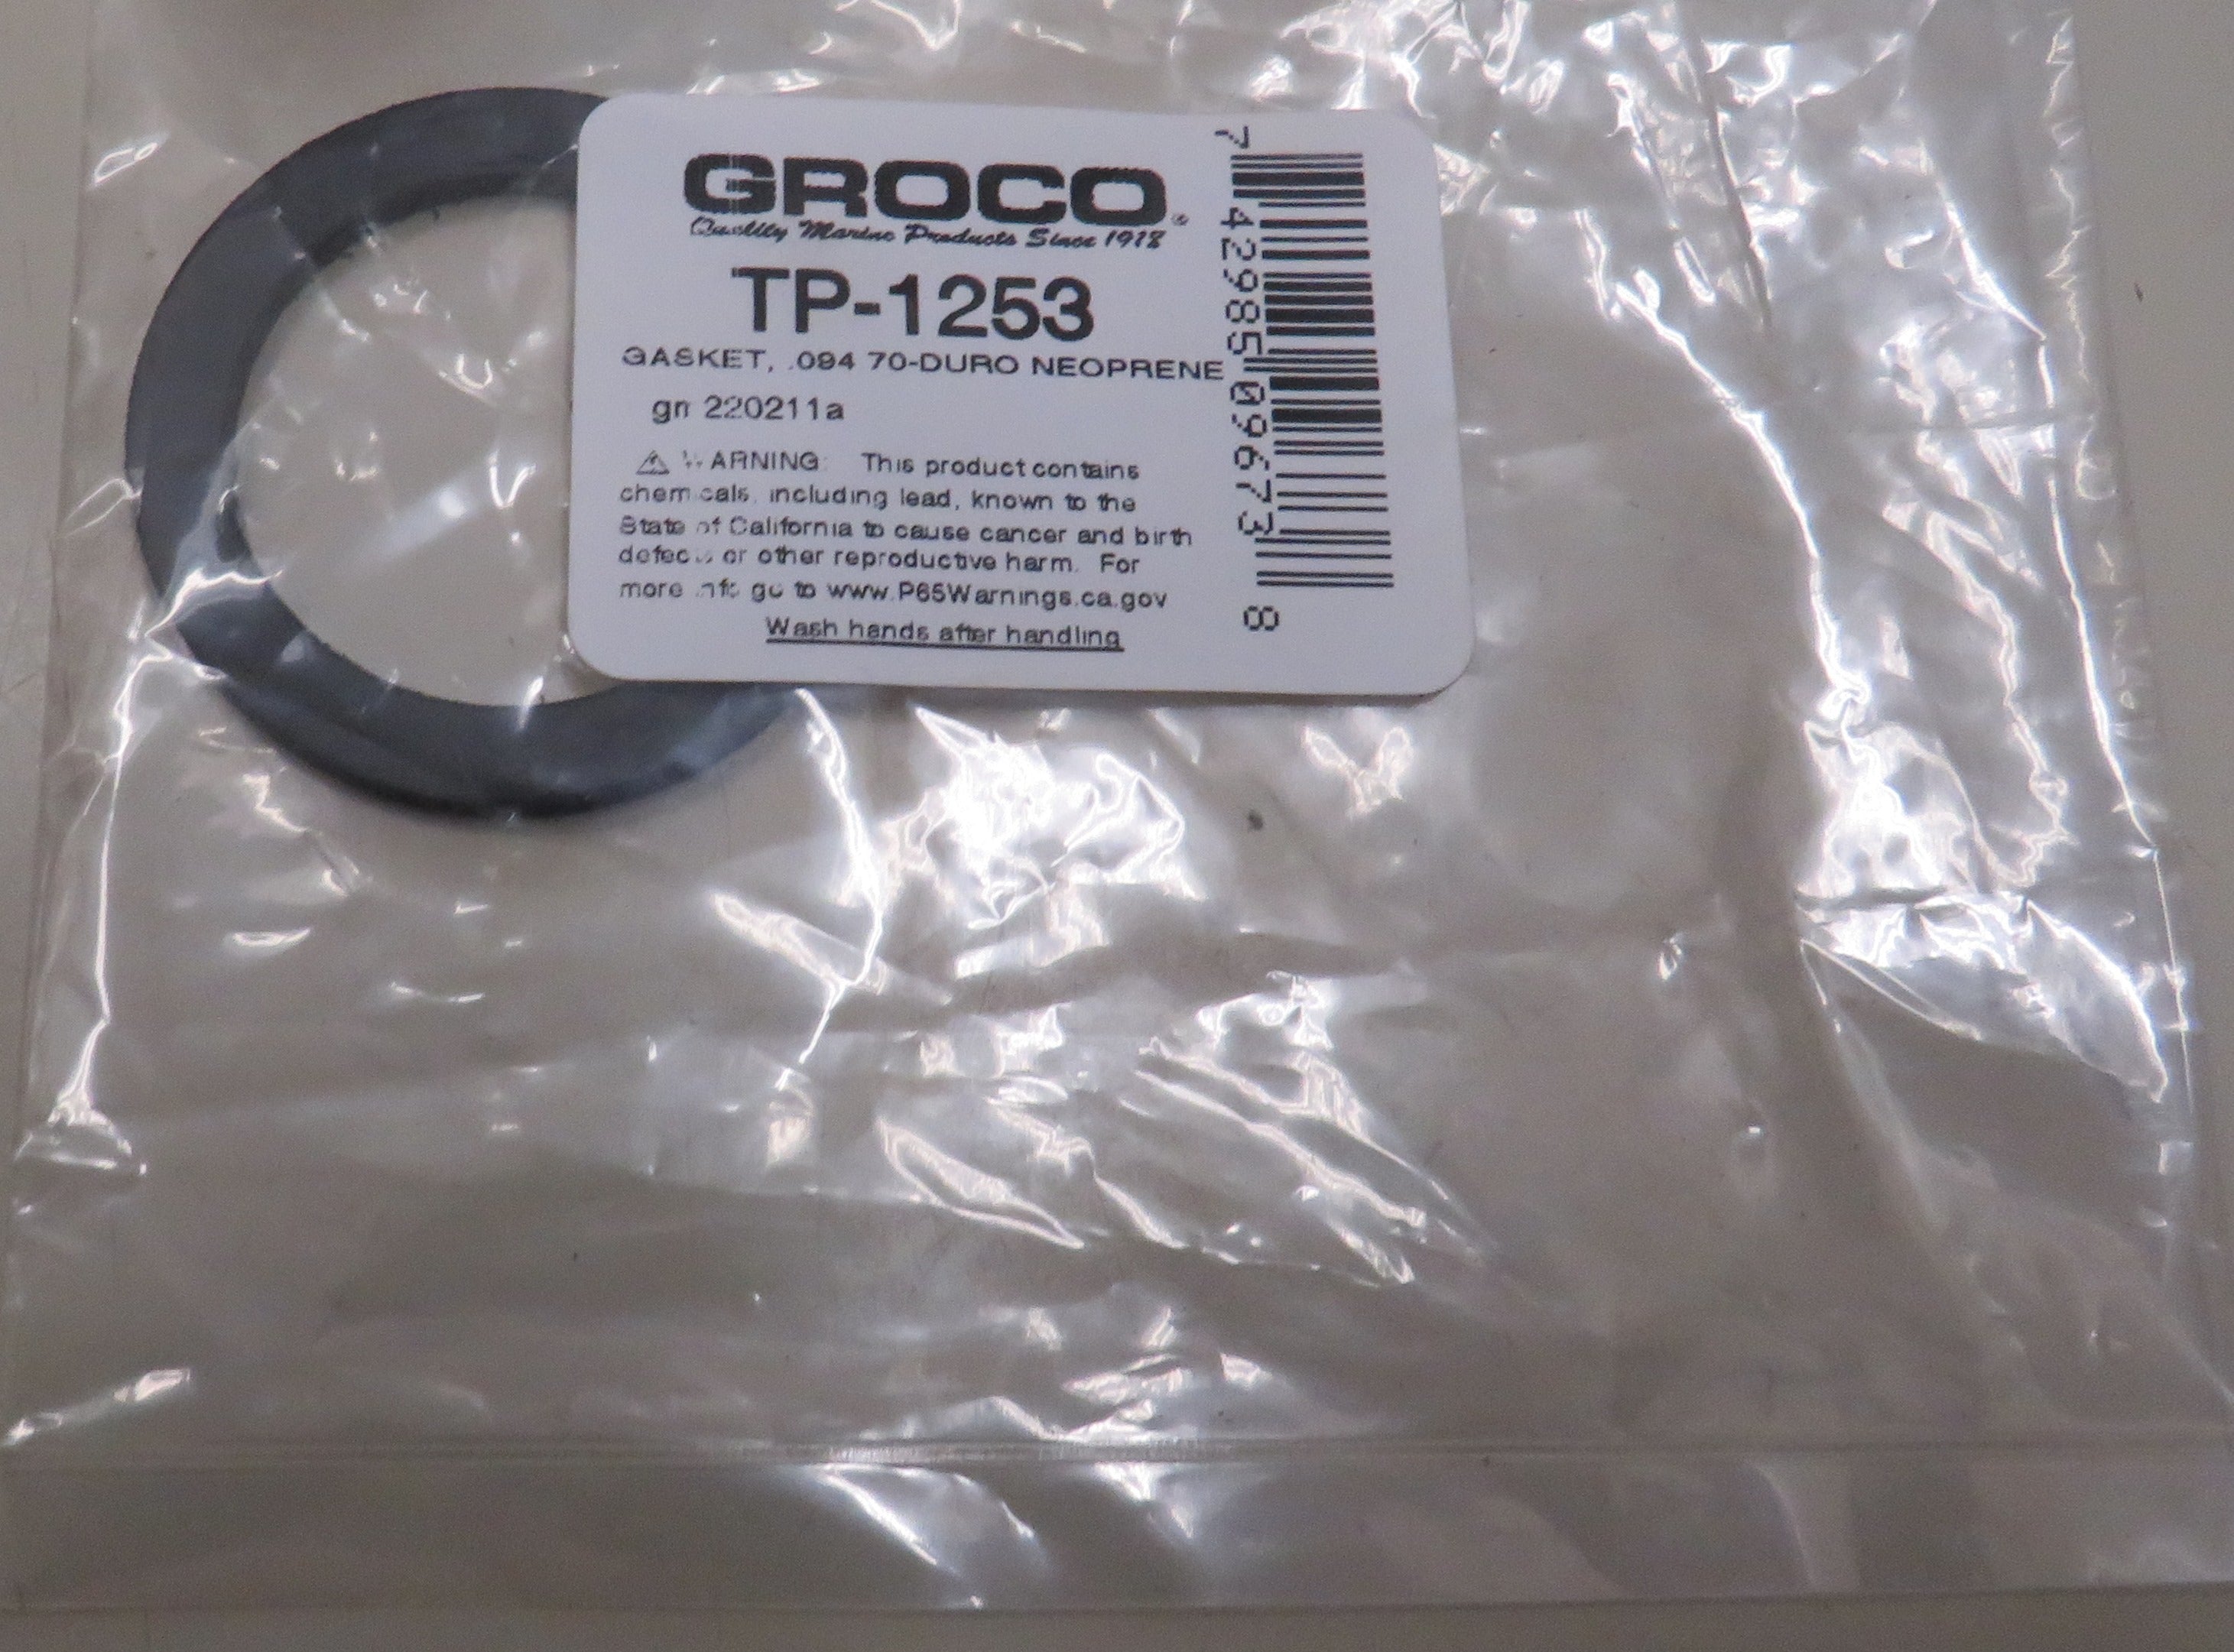 Groco TP-1253 Insert Gasket for Groco TP-1250 tailpiece09470 Duro Neoprene  